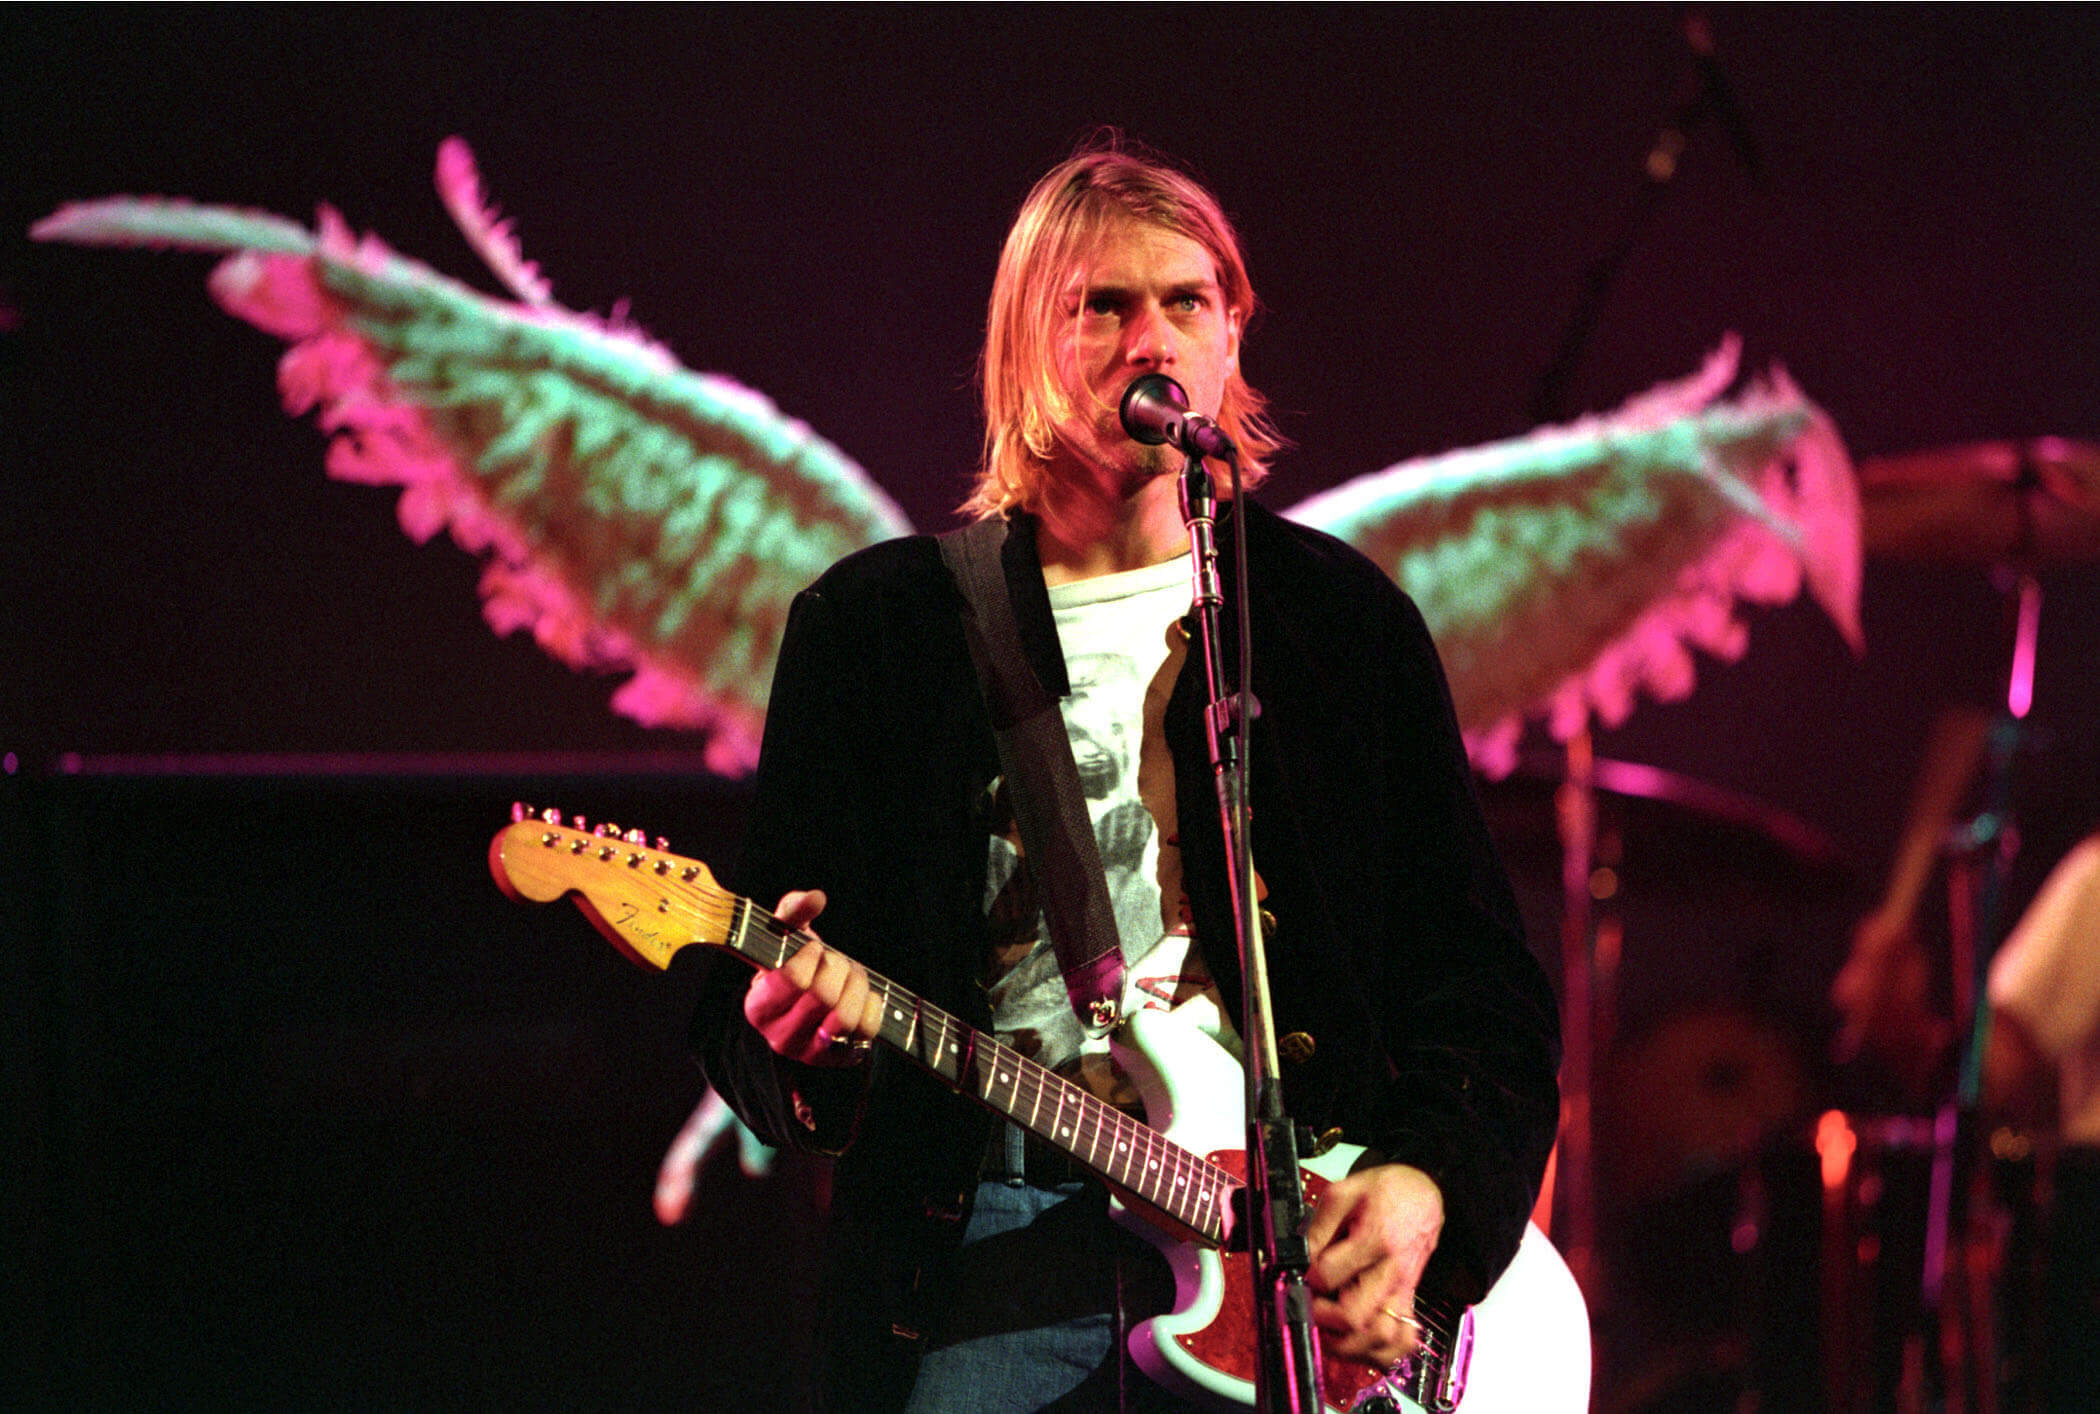 Kurt Cobain with a guitar during Nirvana's "Smells Like Teen Spirit" era